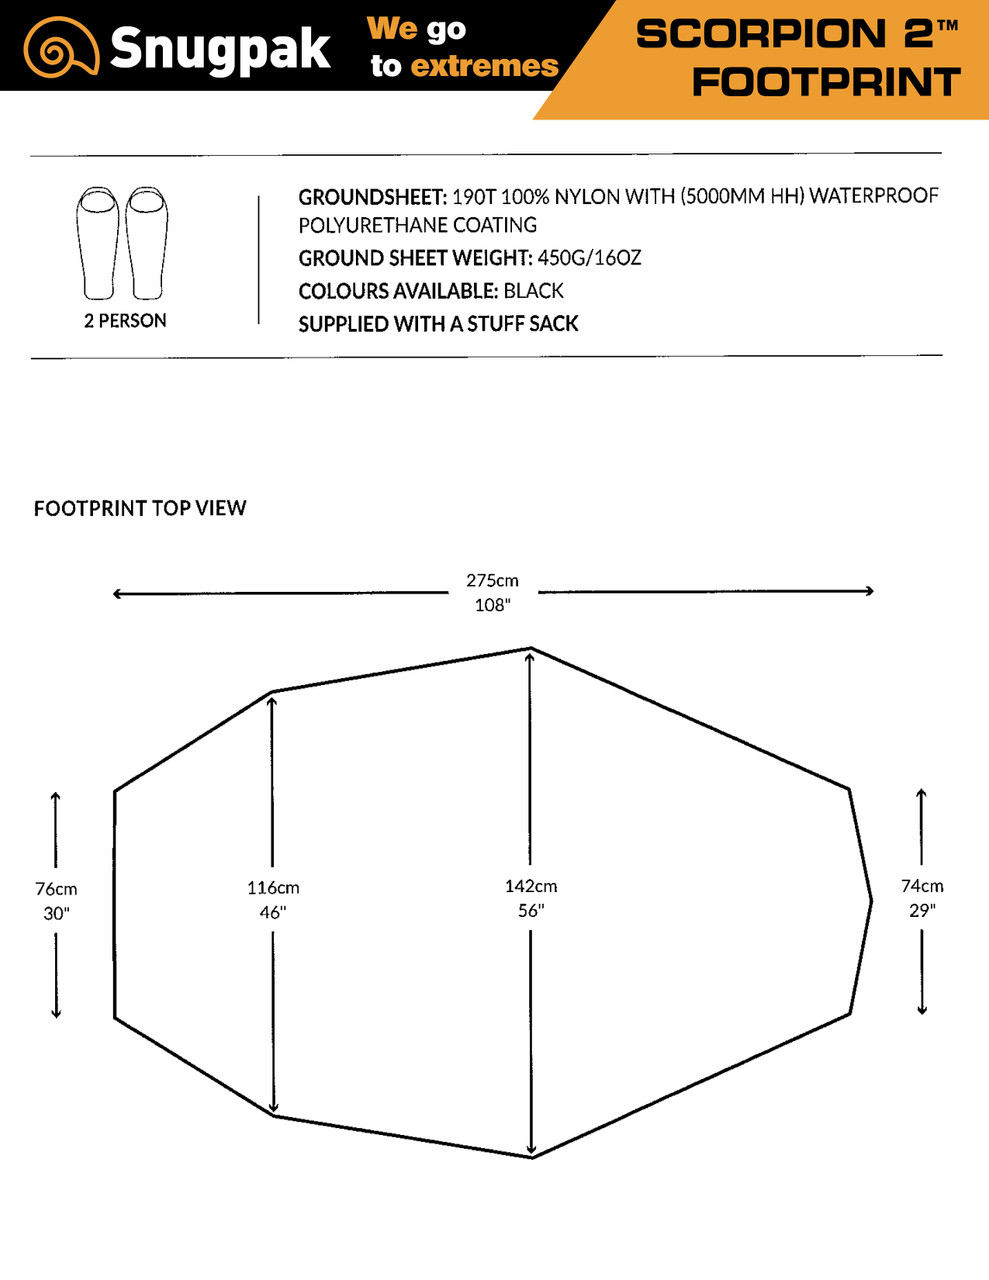 SCORPION 2™ Tent Footprint